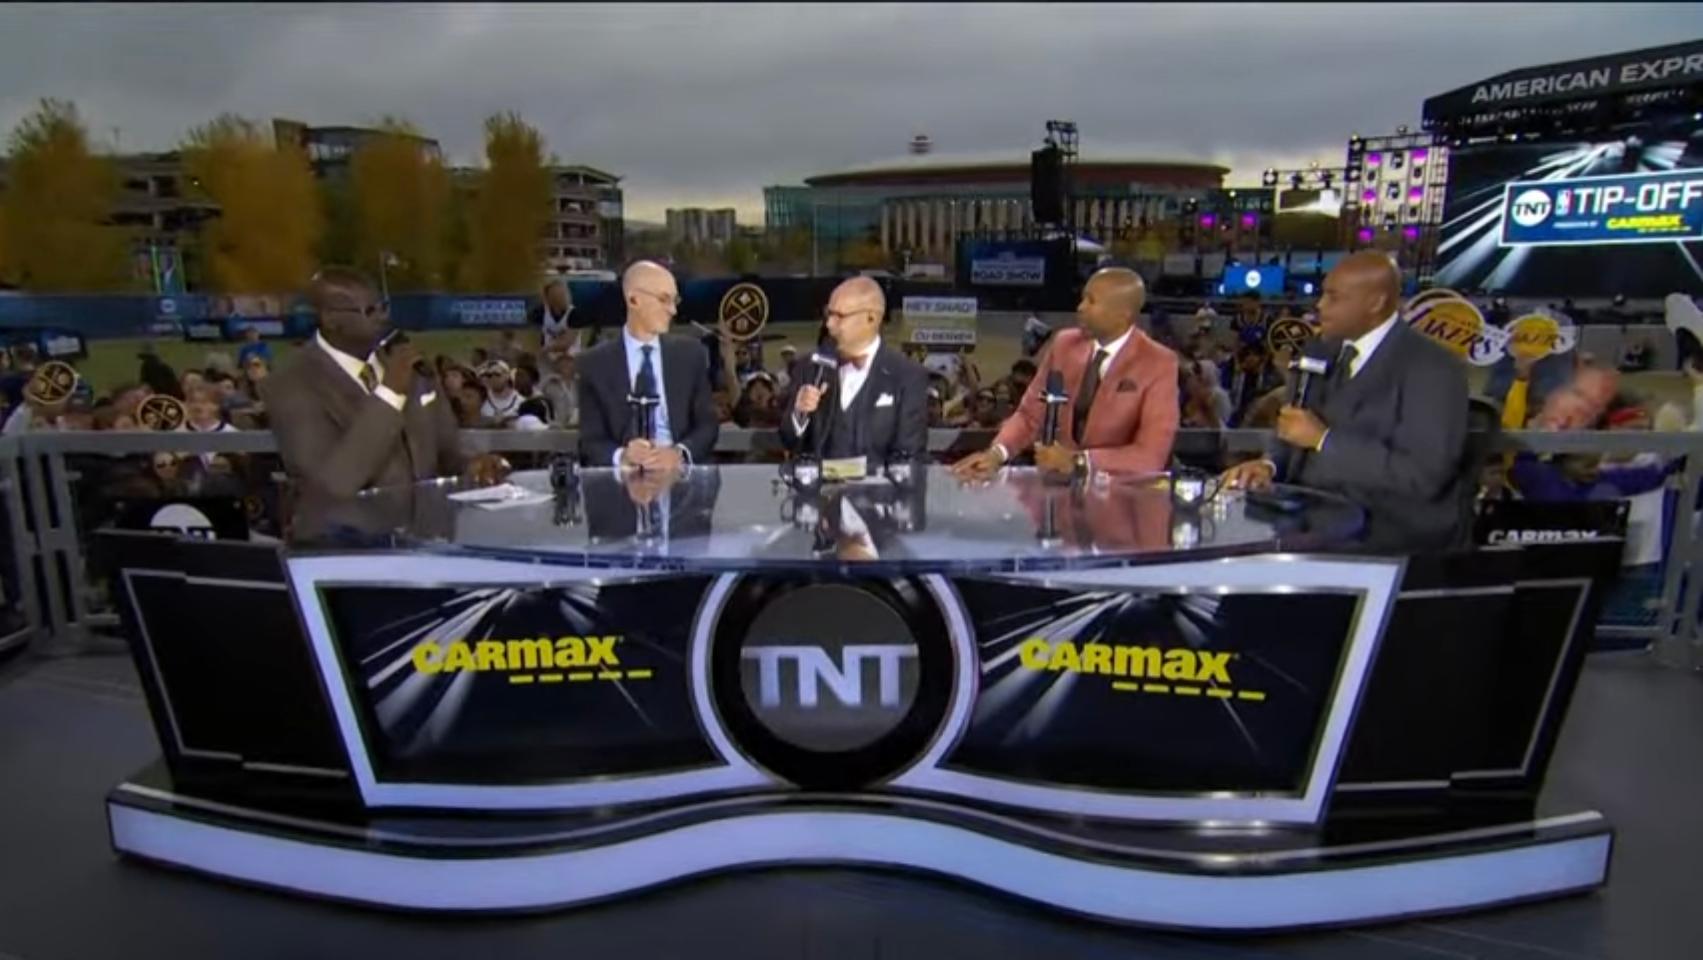 NBA on TNT